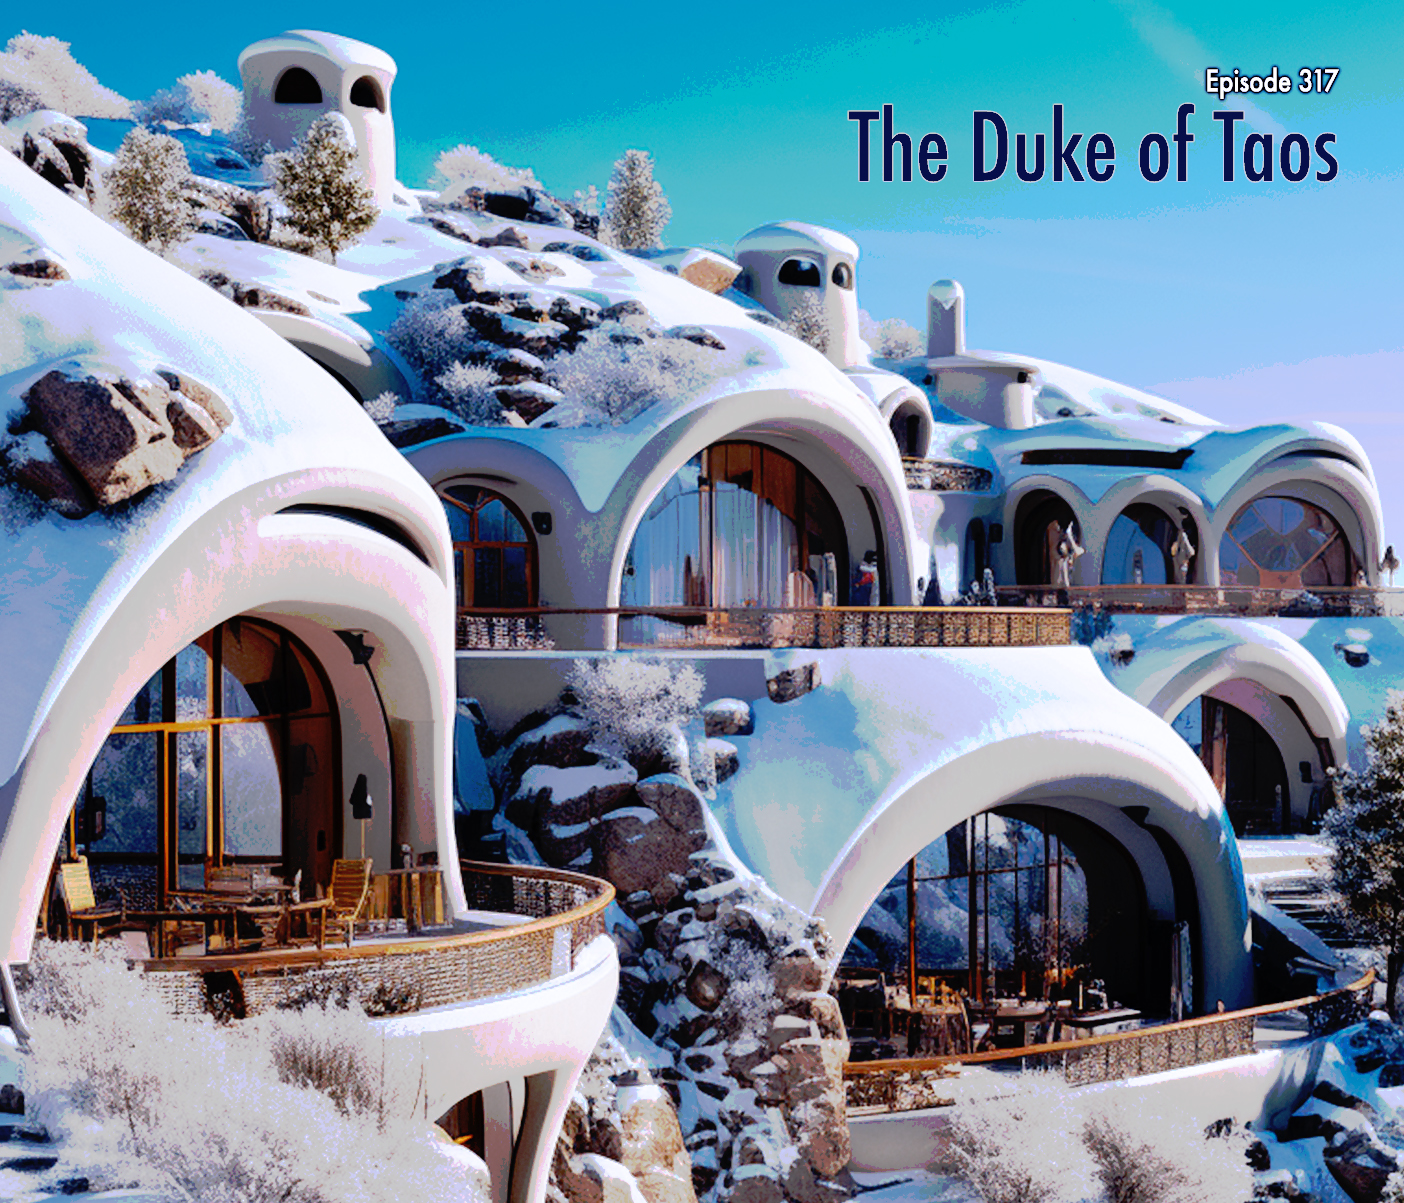 podcast 317 - The Duke of Taos